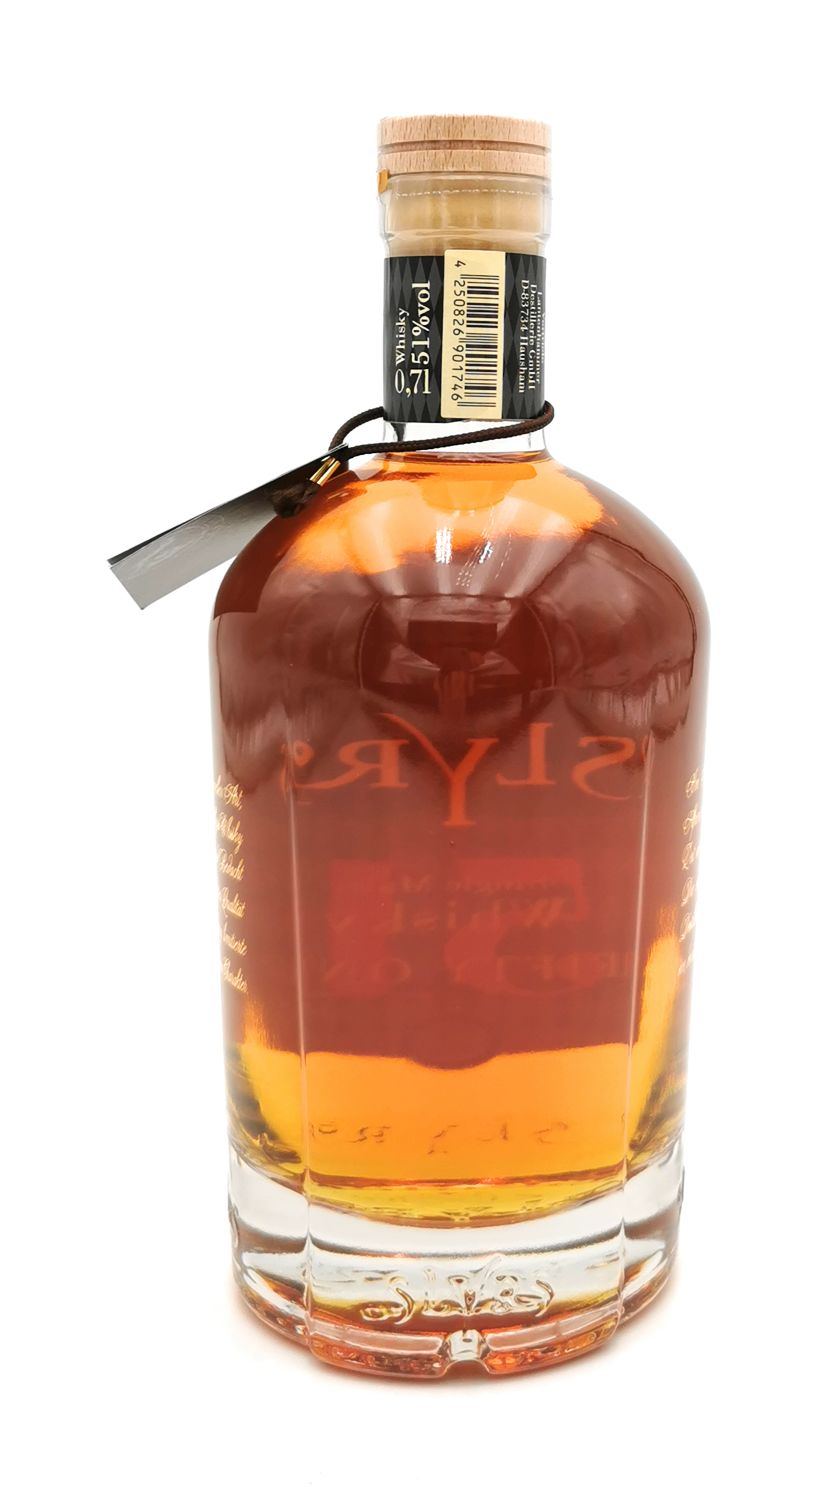 Spirituosen Aktion! :: Slyrs l One Bavarian / Malt Alkohol 0,7 Whisky Single Fifty 51% 1x l vol.64,27 €